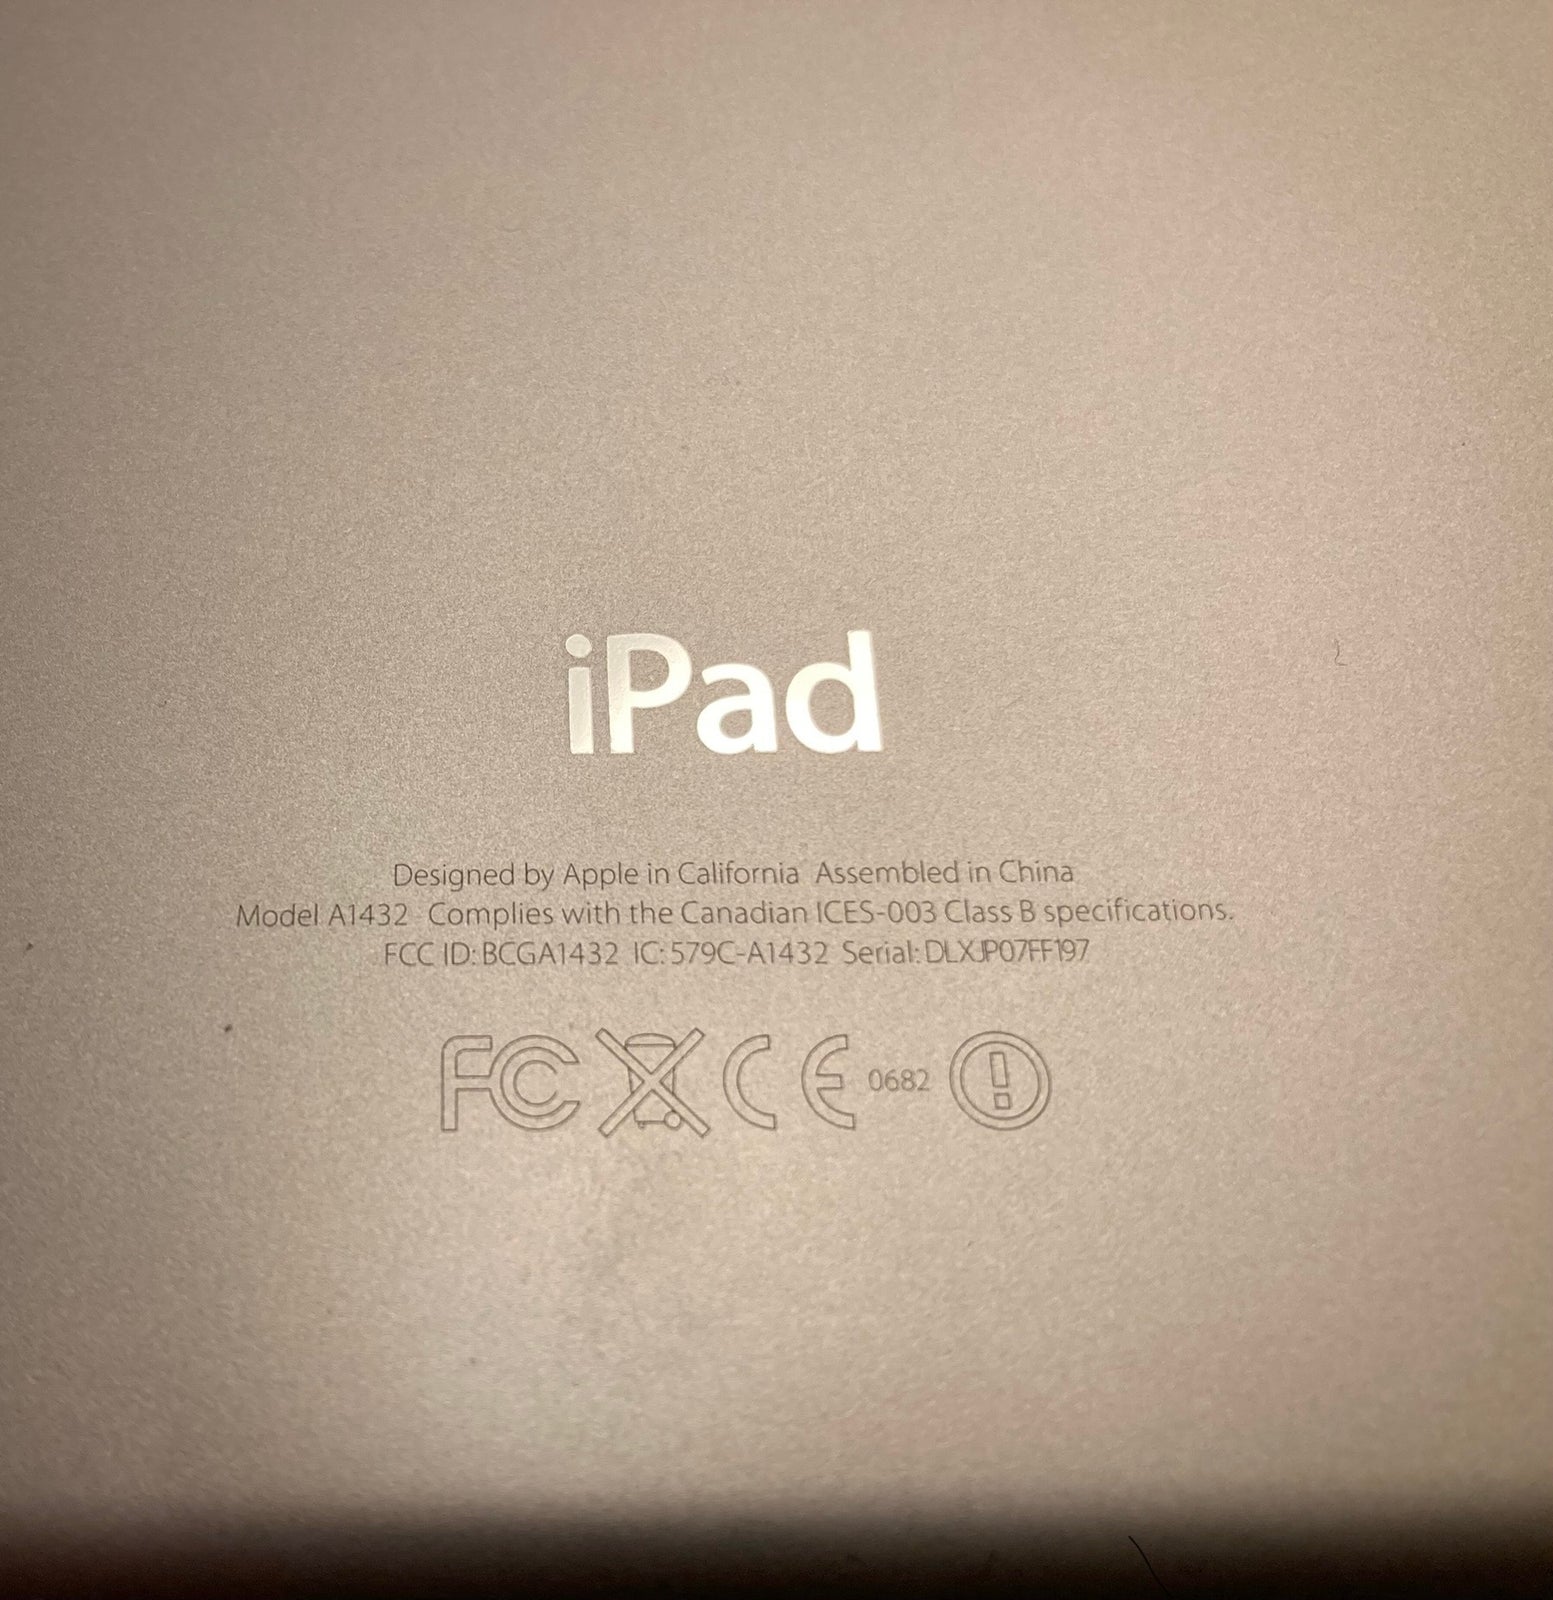 iPad mini, hvid, God